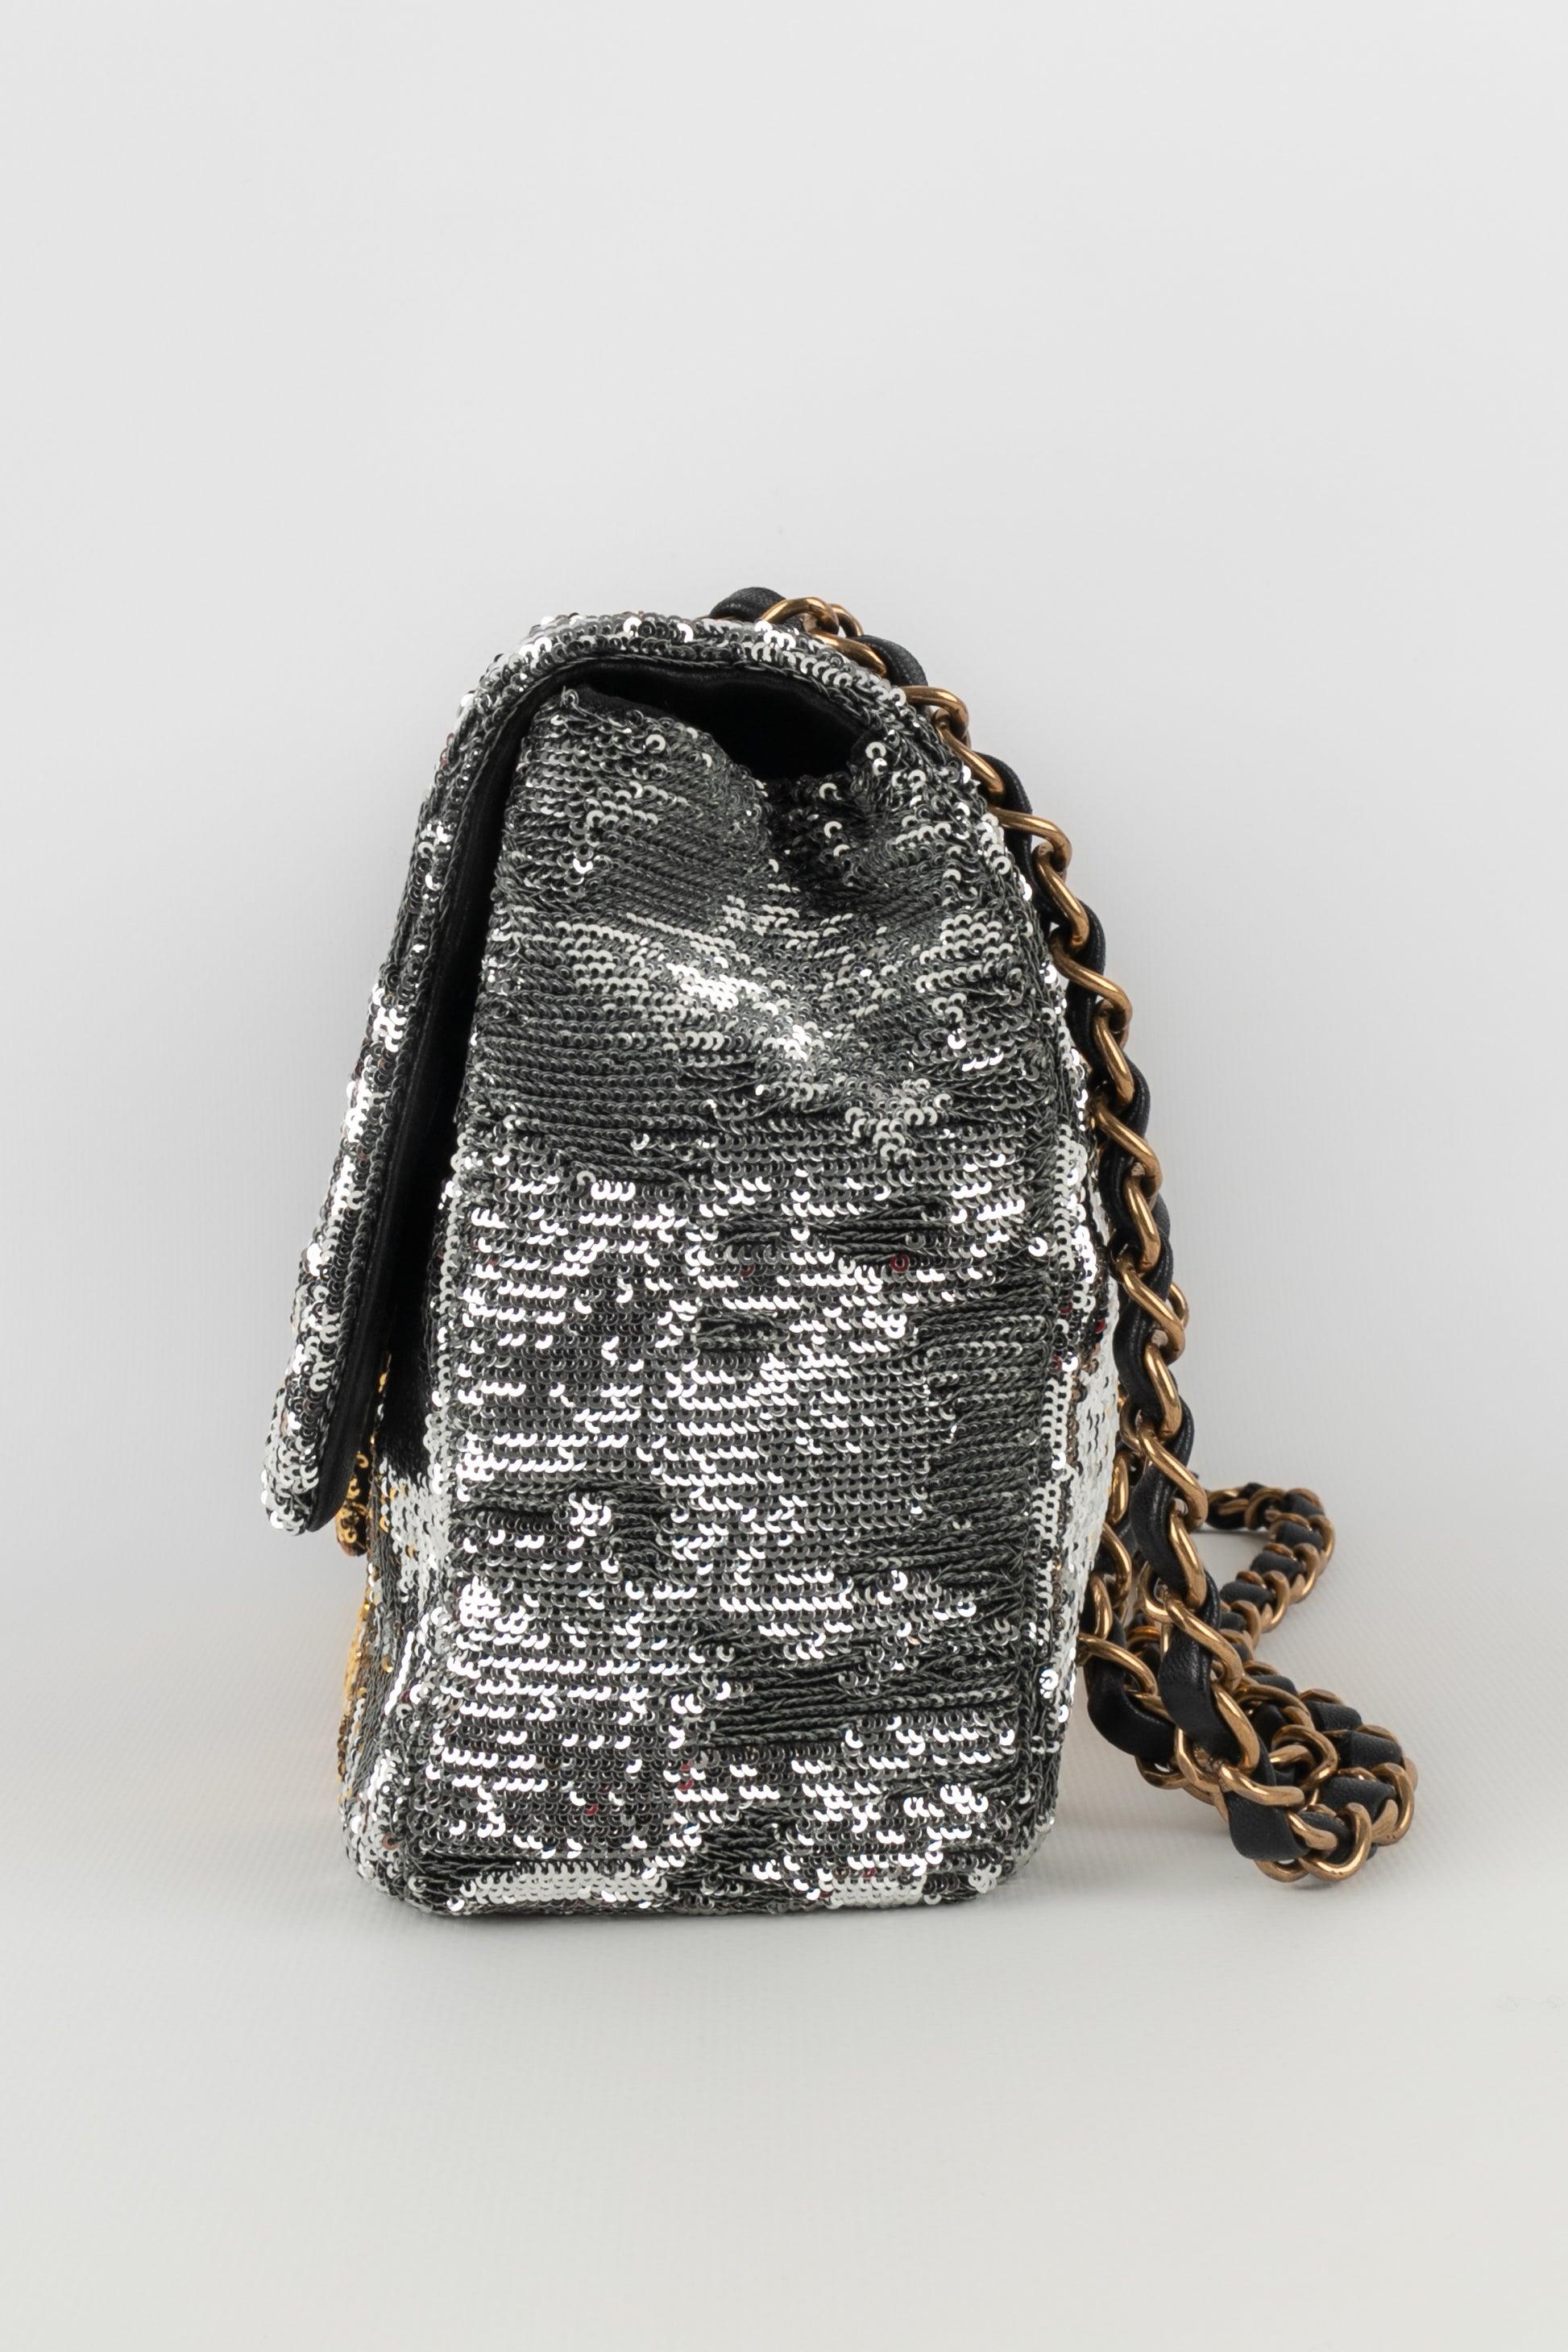 Chanel Timeless Bag Covered in Sequins, Black Leather & Gold Metal Details, 2017 3